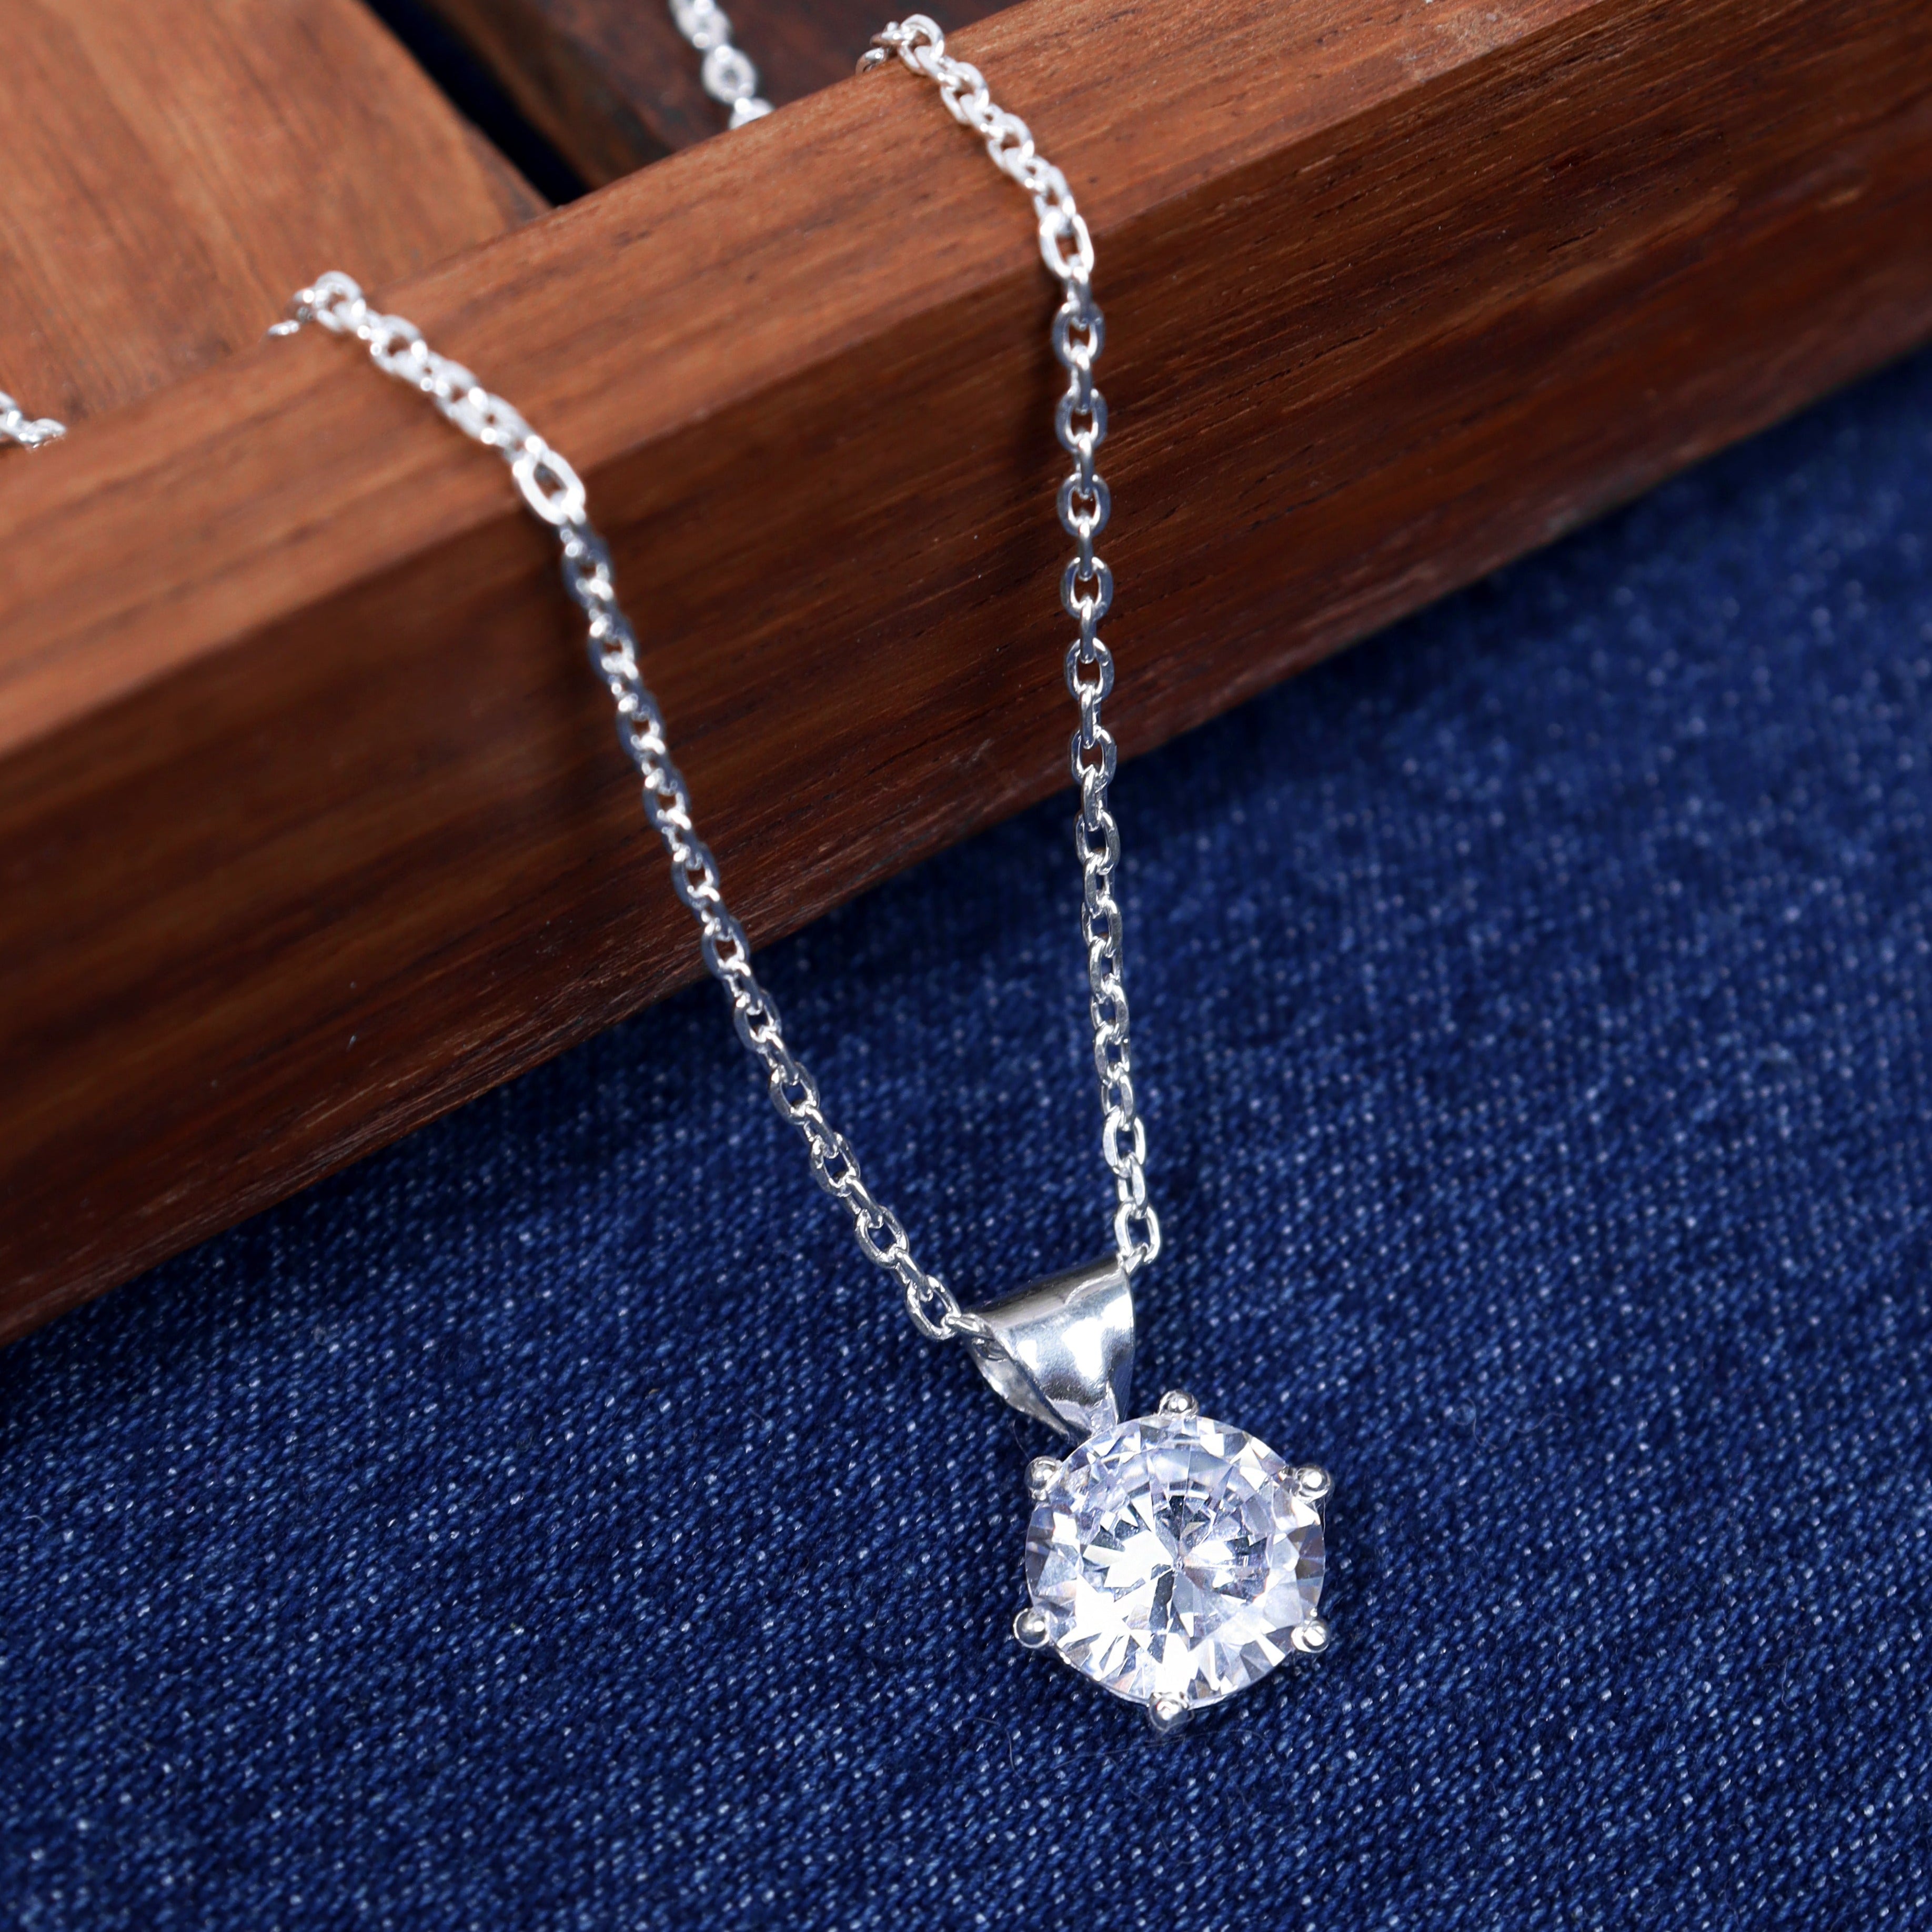 Bezel-Set Round Diamond Solitaire Necklace | Angara